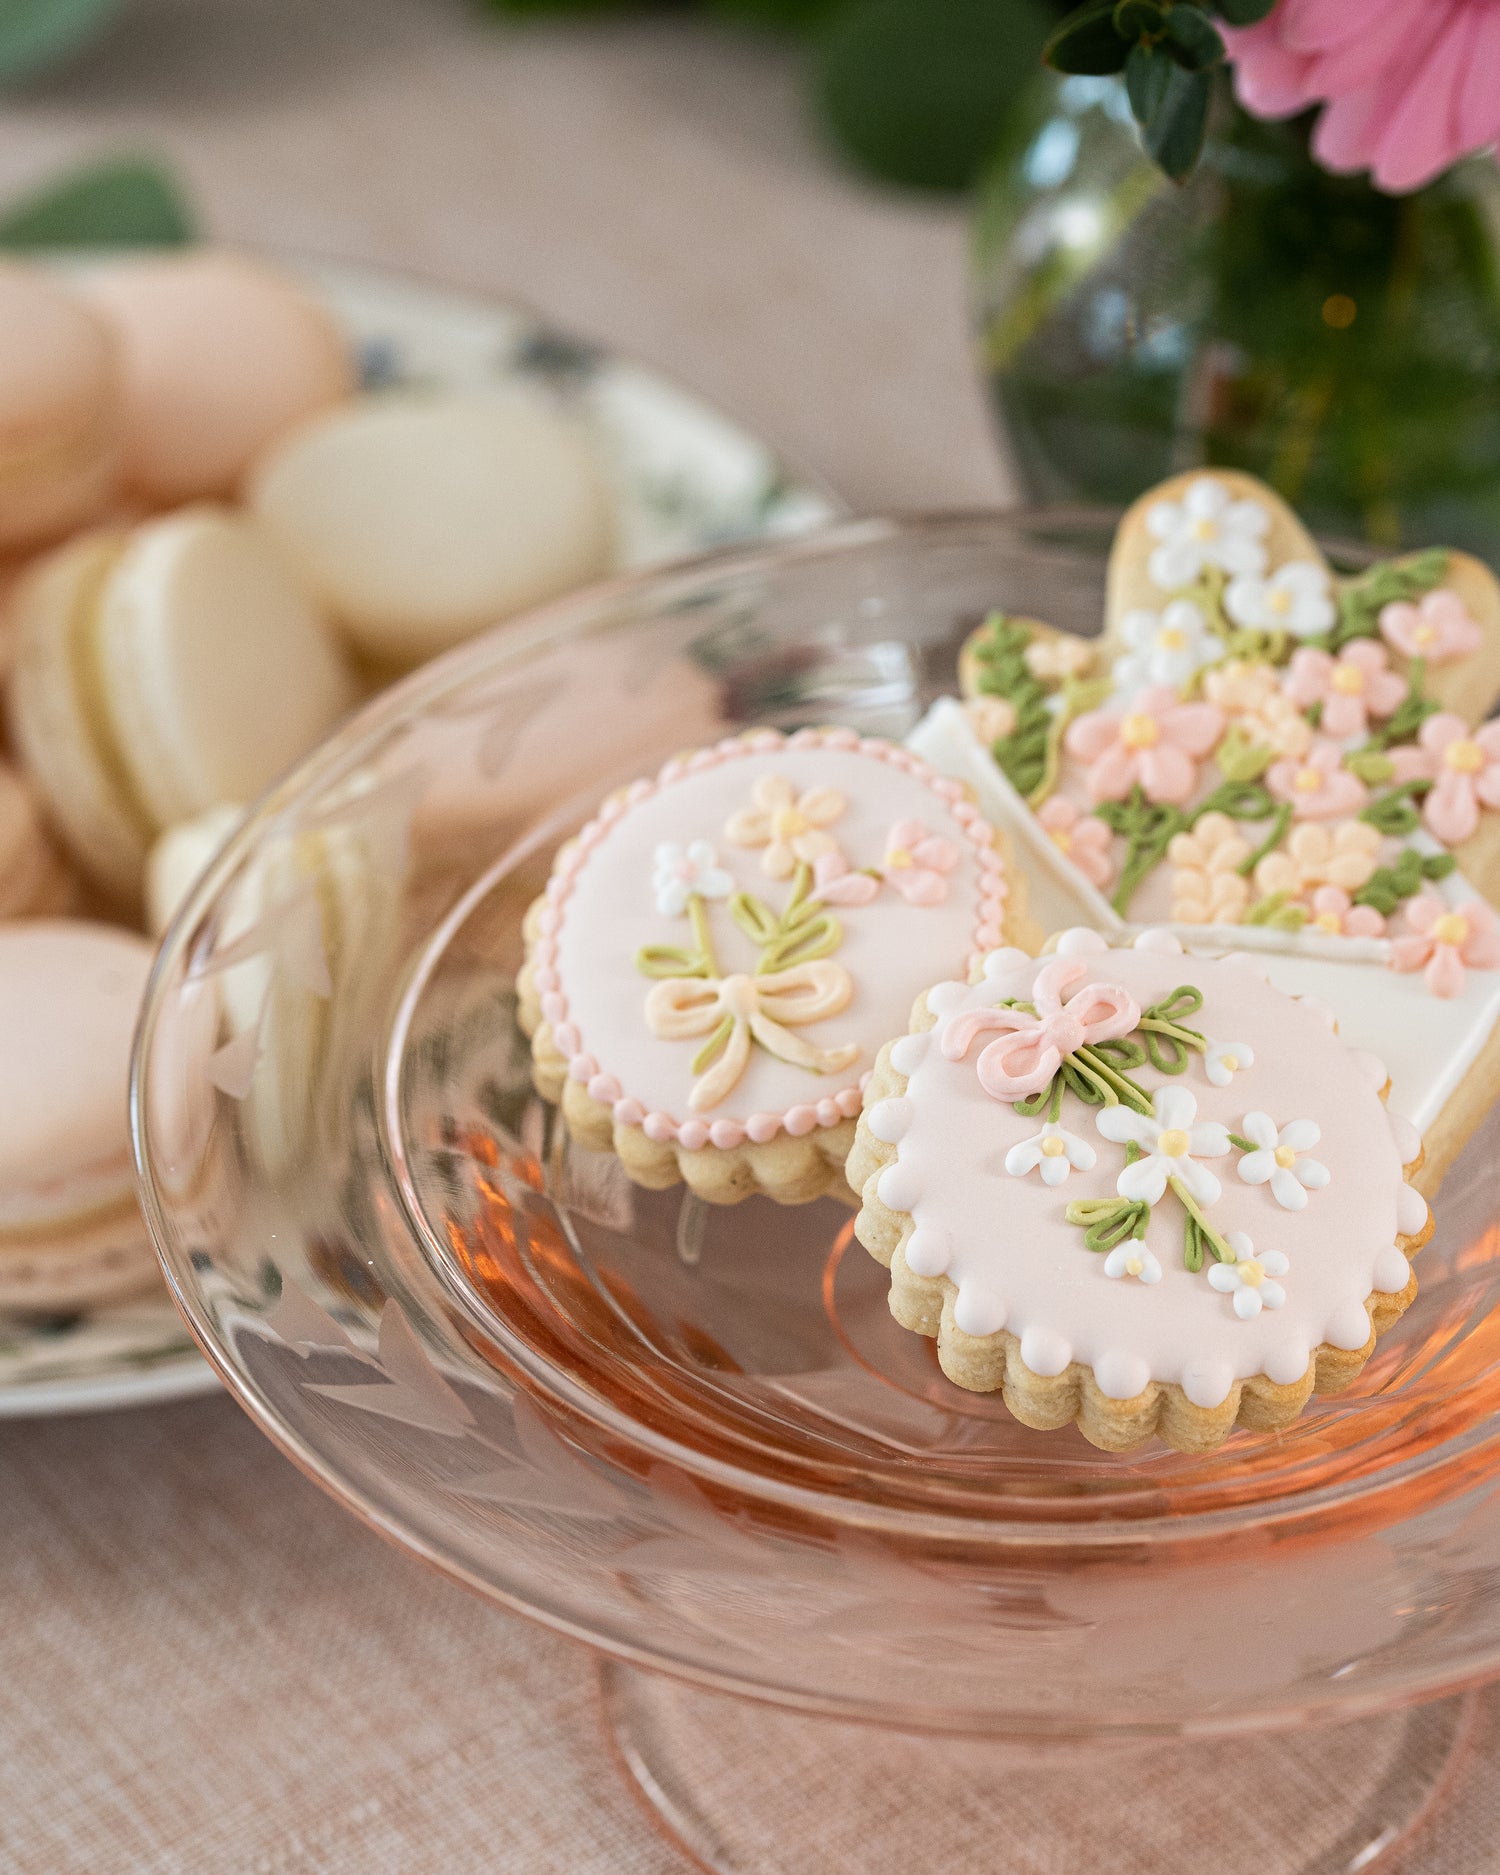 custom decorated sugar cookies for a wedding in halifax nova scotia